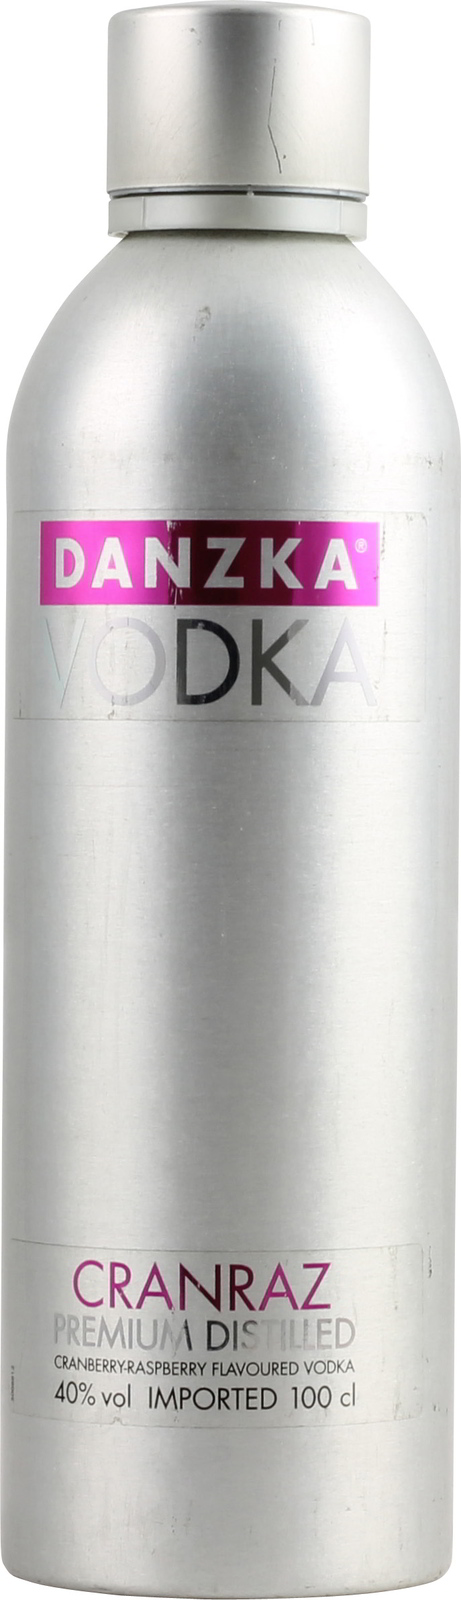 Danzka Cranraz Vodka aus Dänemark im Shop kaufen